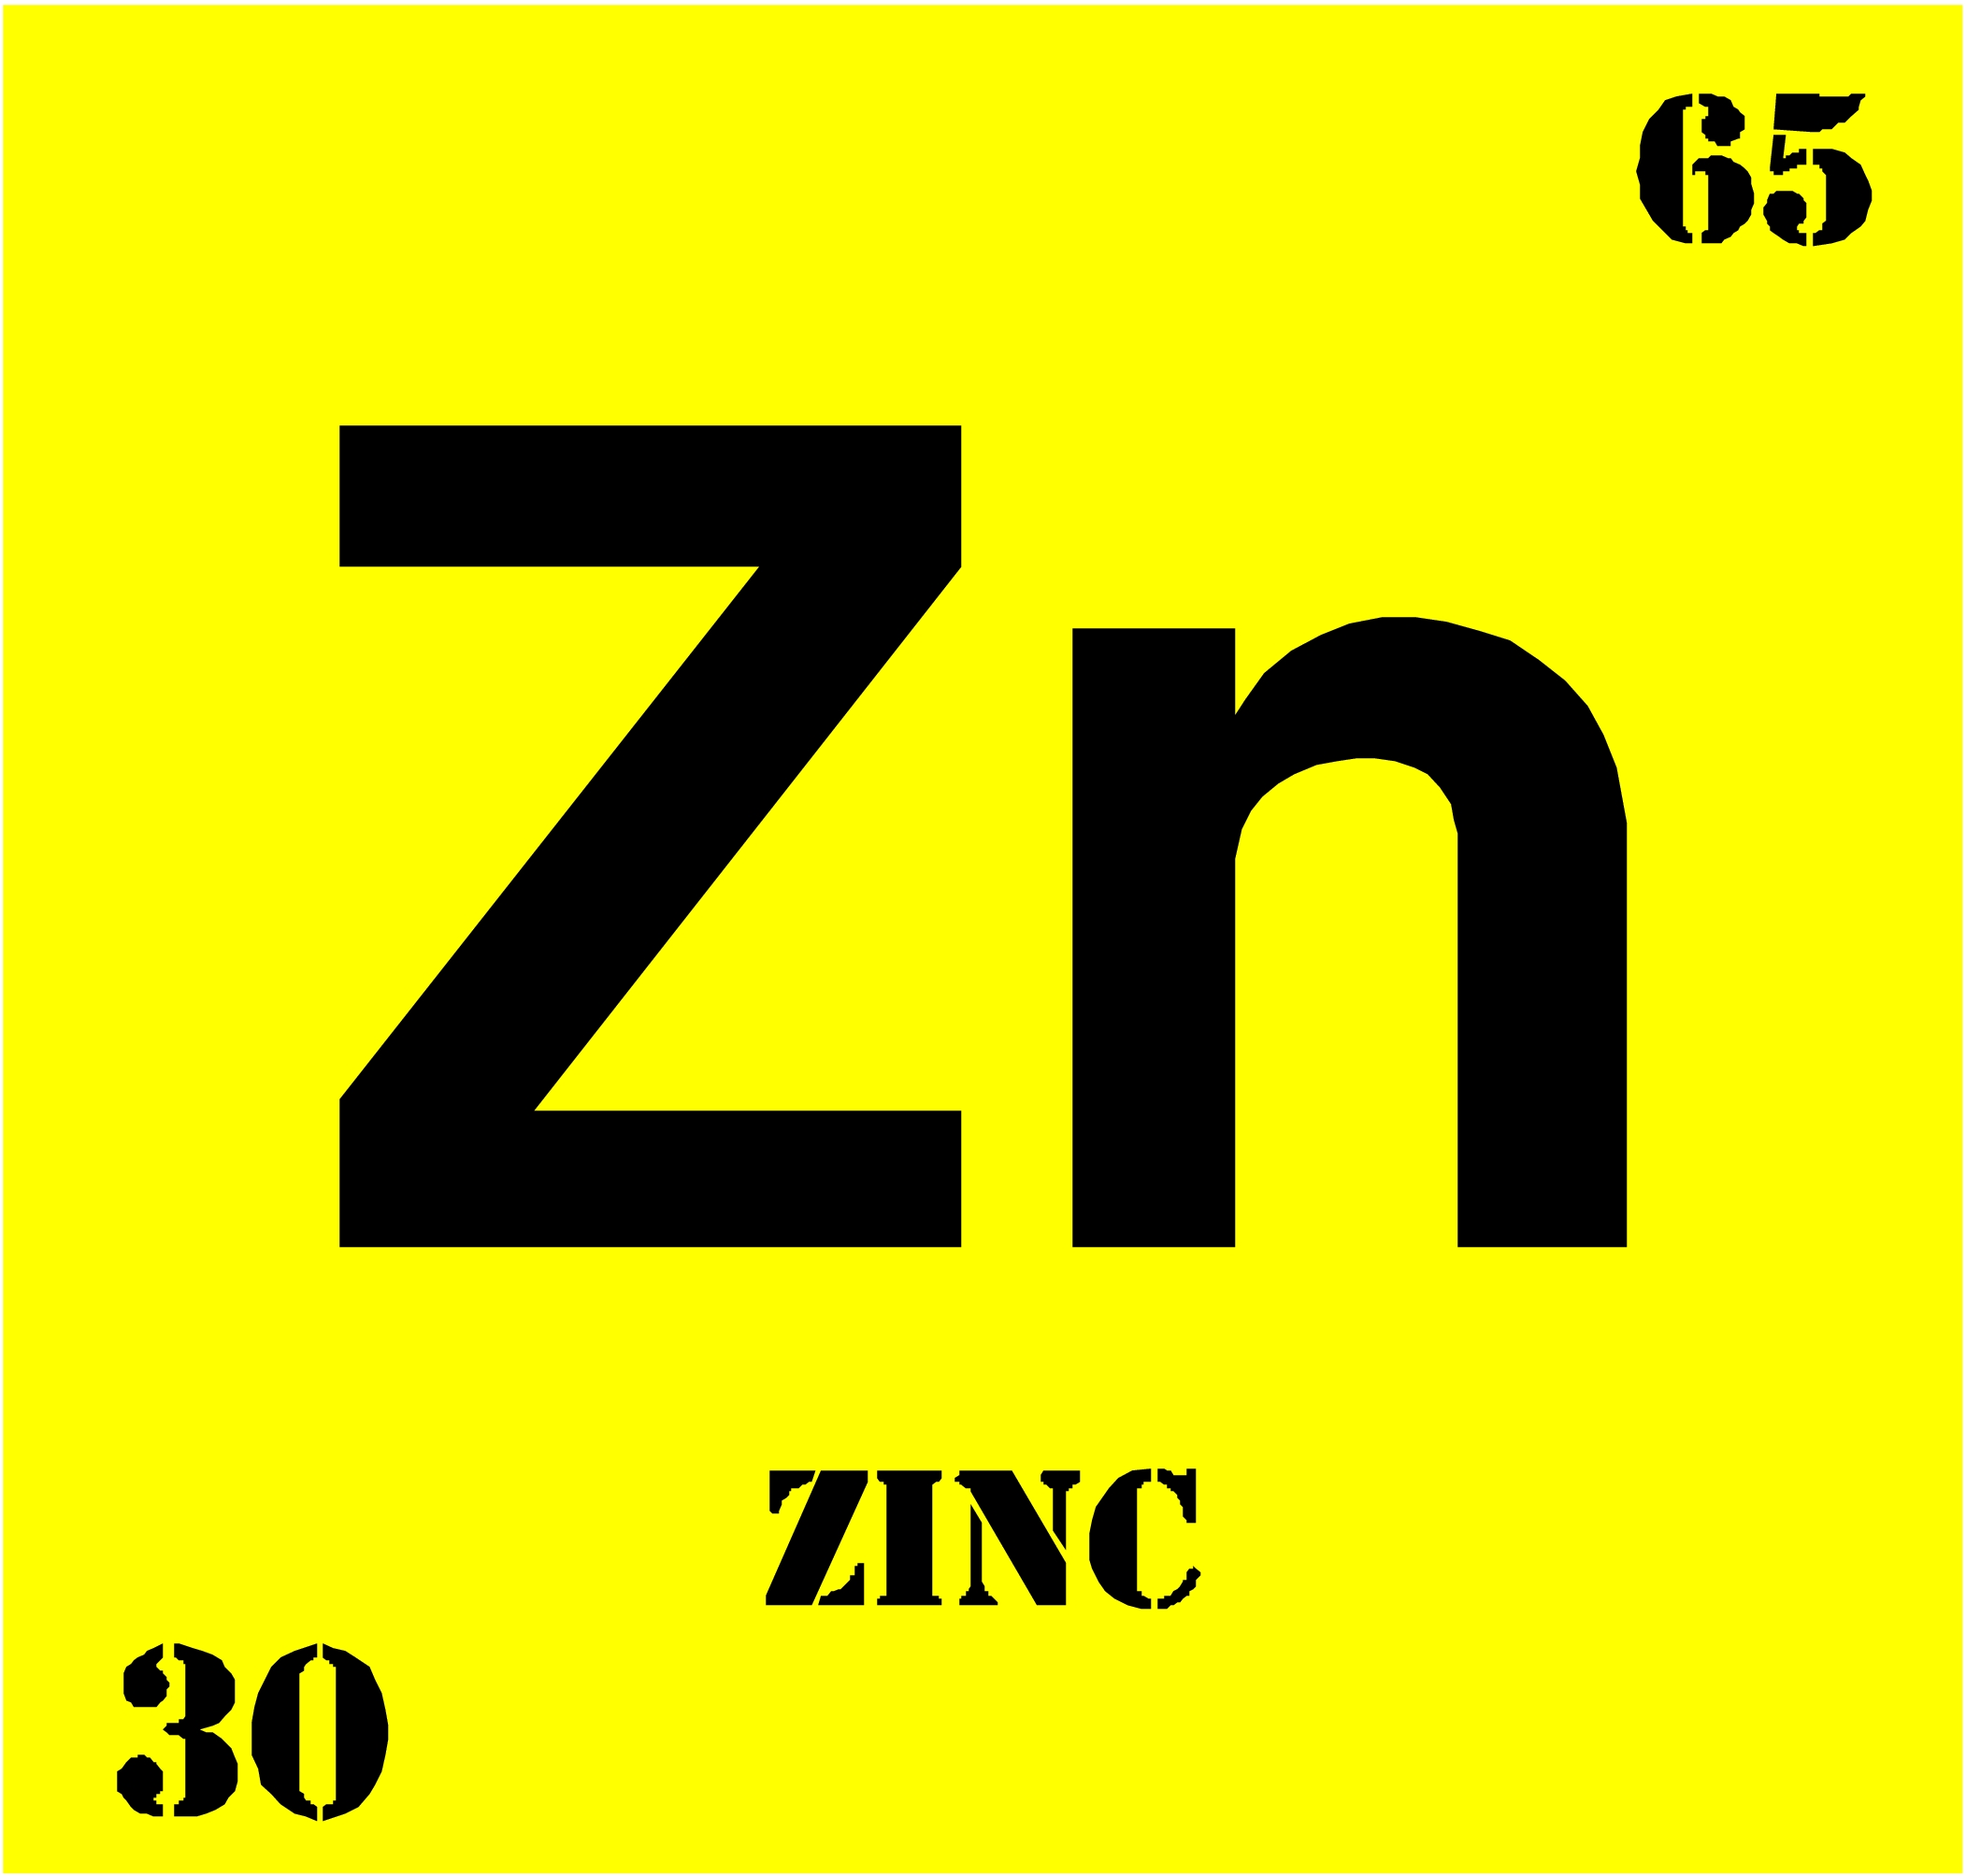 Zn zn0. Цинк название элемента. Цинк химический элемент. Цинк химический элемент обозначение. Таблица Менделеева цинк ZN.